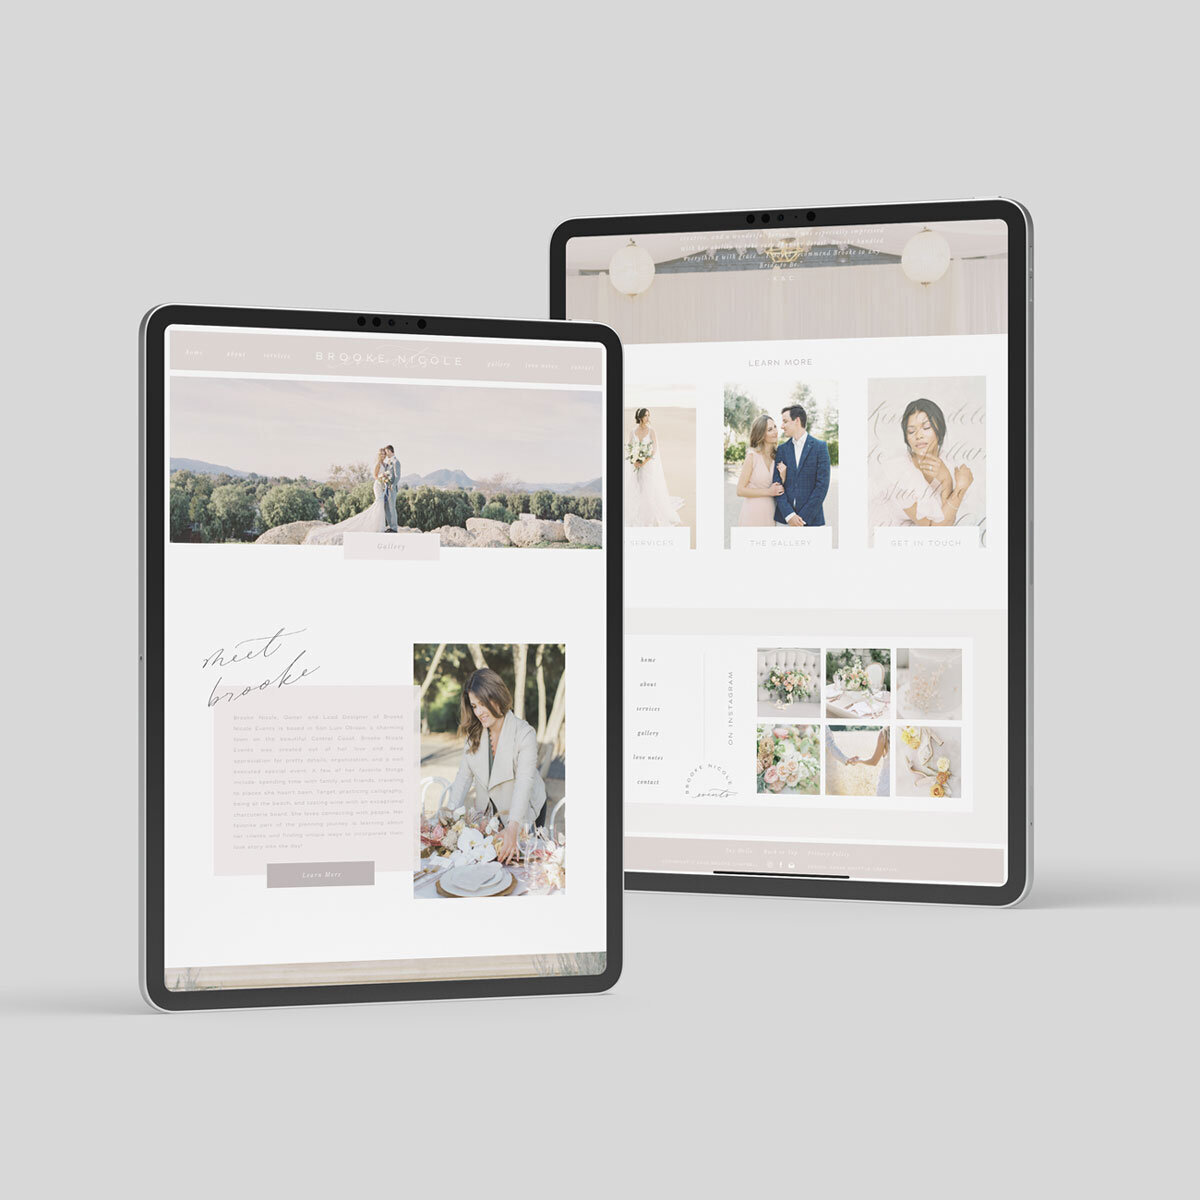 Digital mockup of ipads with luxury website design